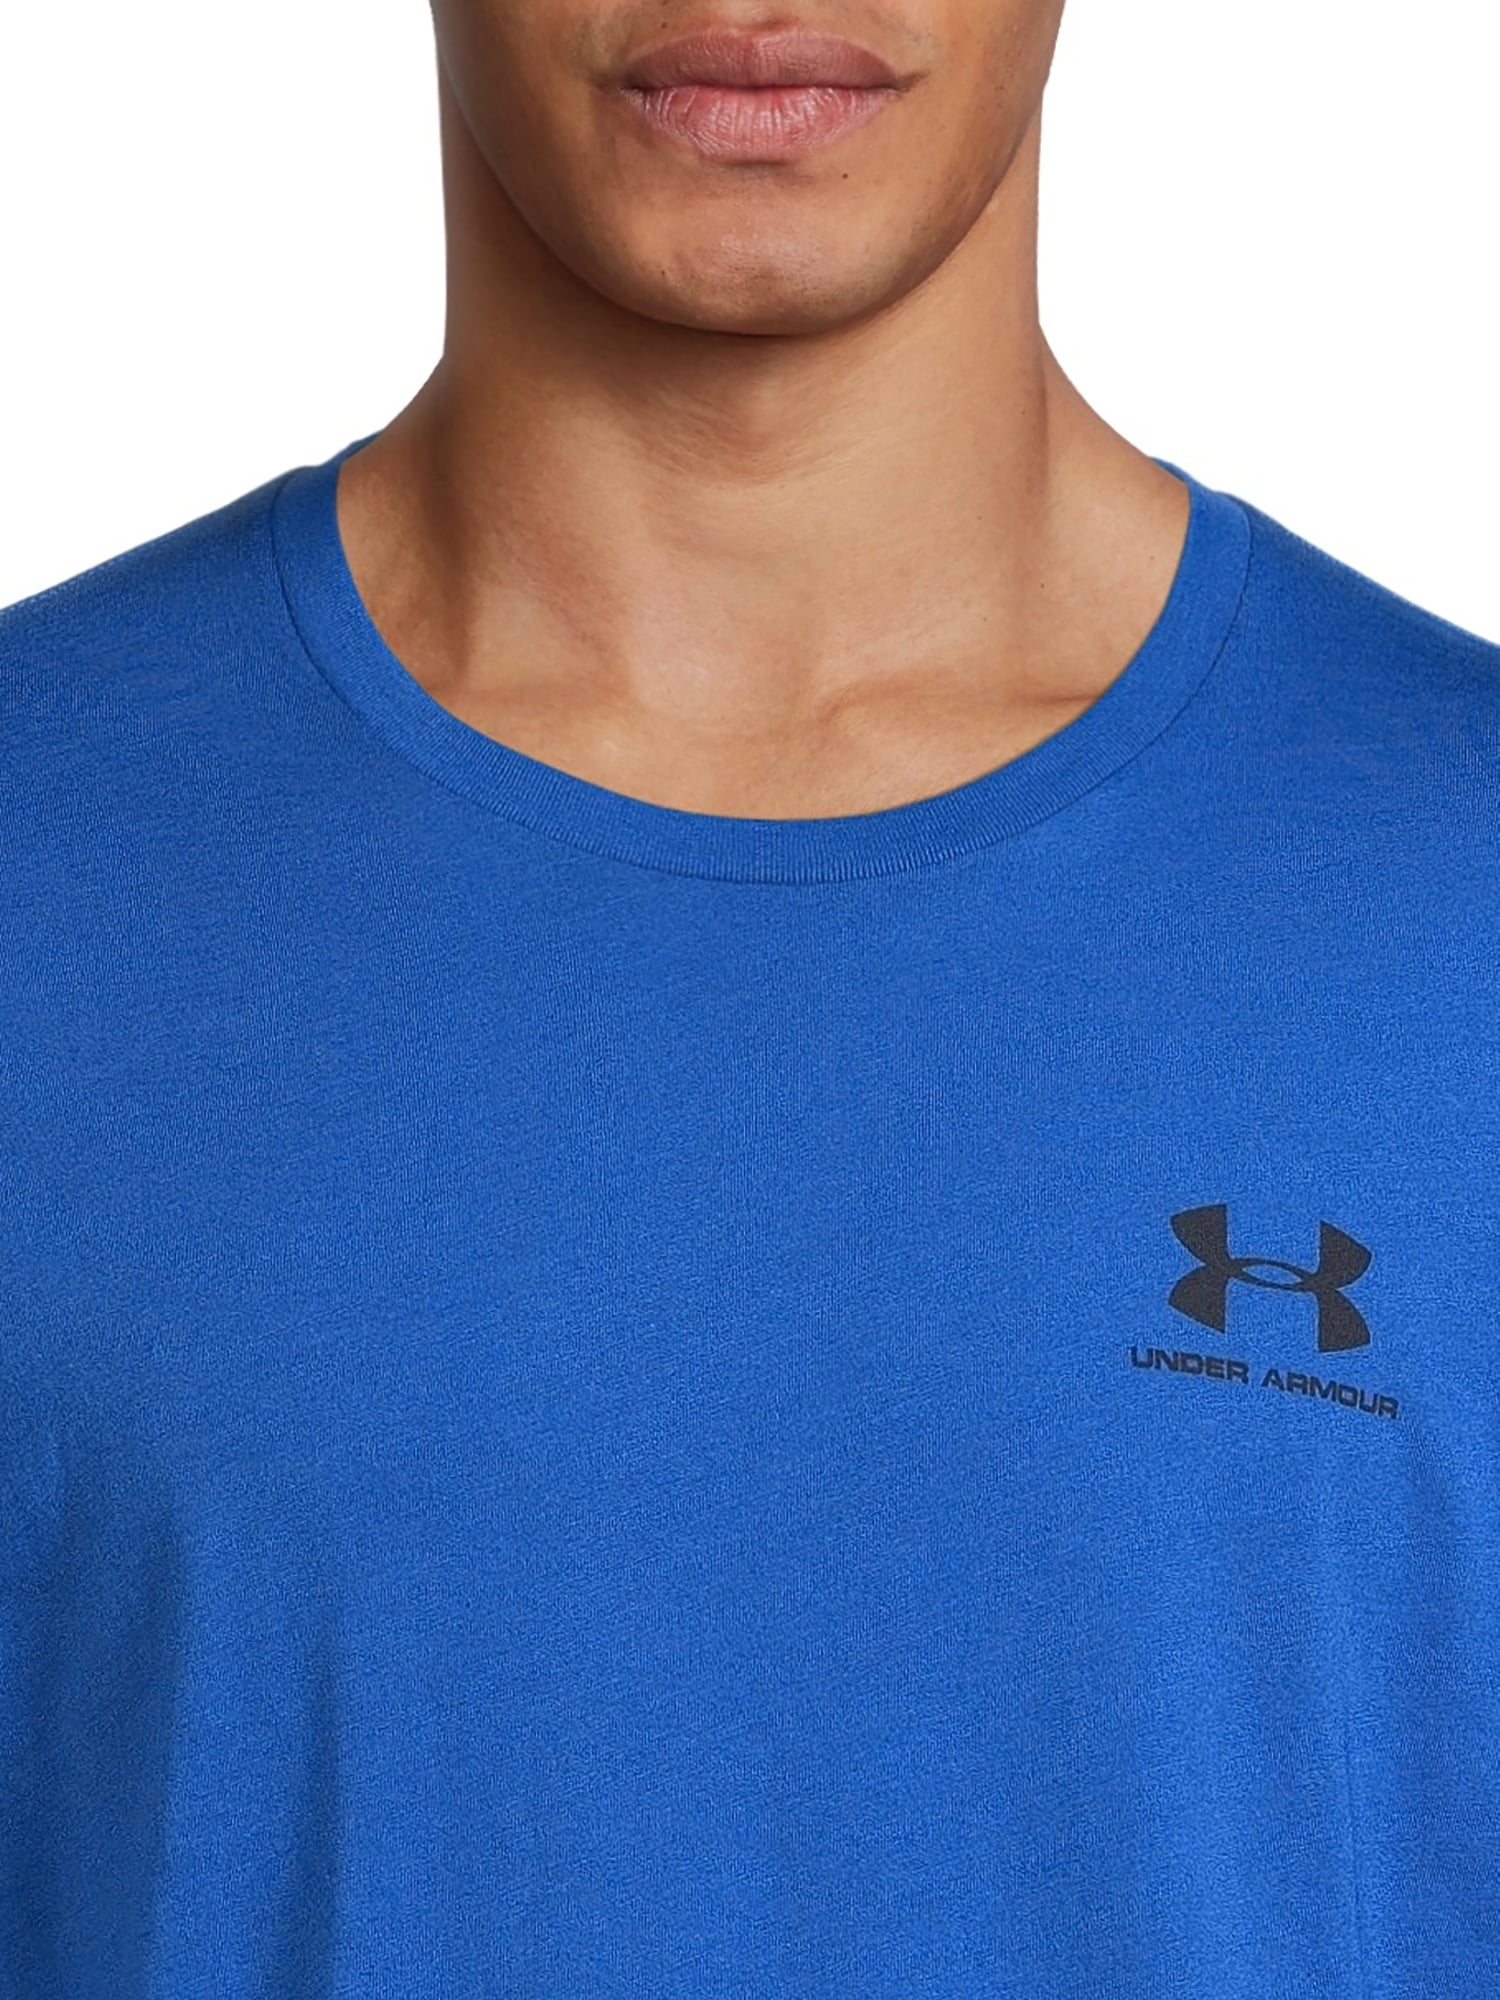 Buy Under Armour Sportstyle T-shirt Hommes Bleu online